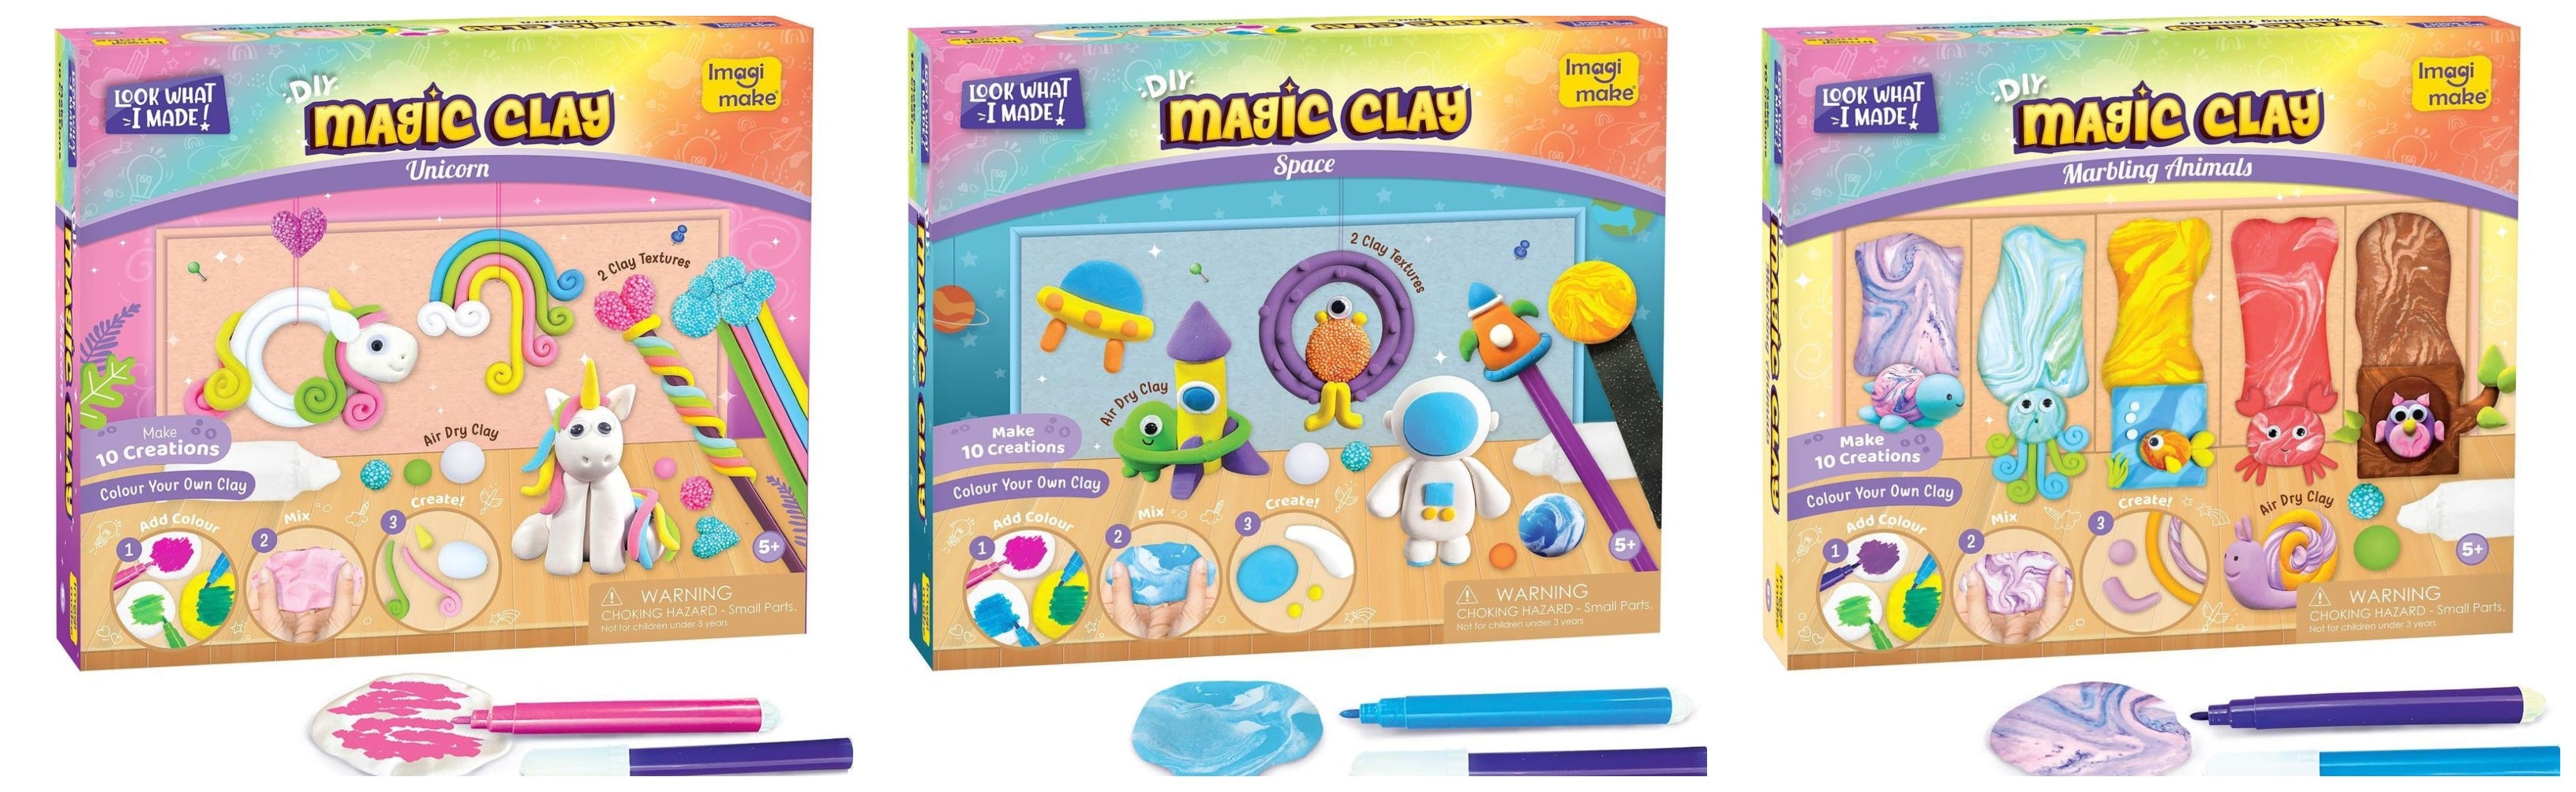 Magic Clay - New Launch!! – Imagimake